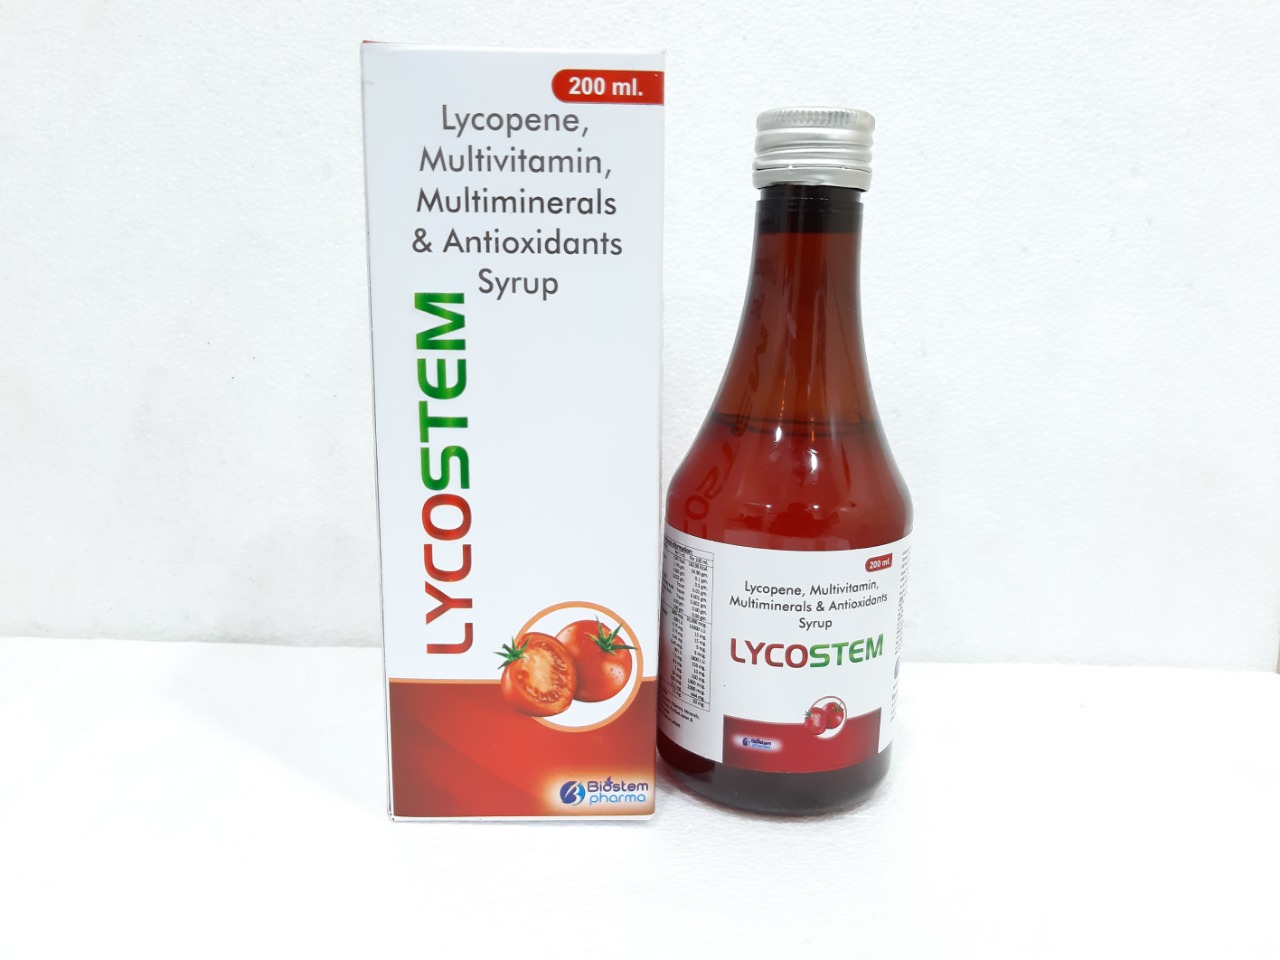 Lycopene Multivitamins Mutiminerals & Antioxidant Syrup